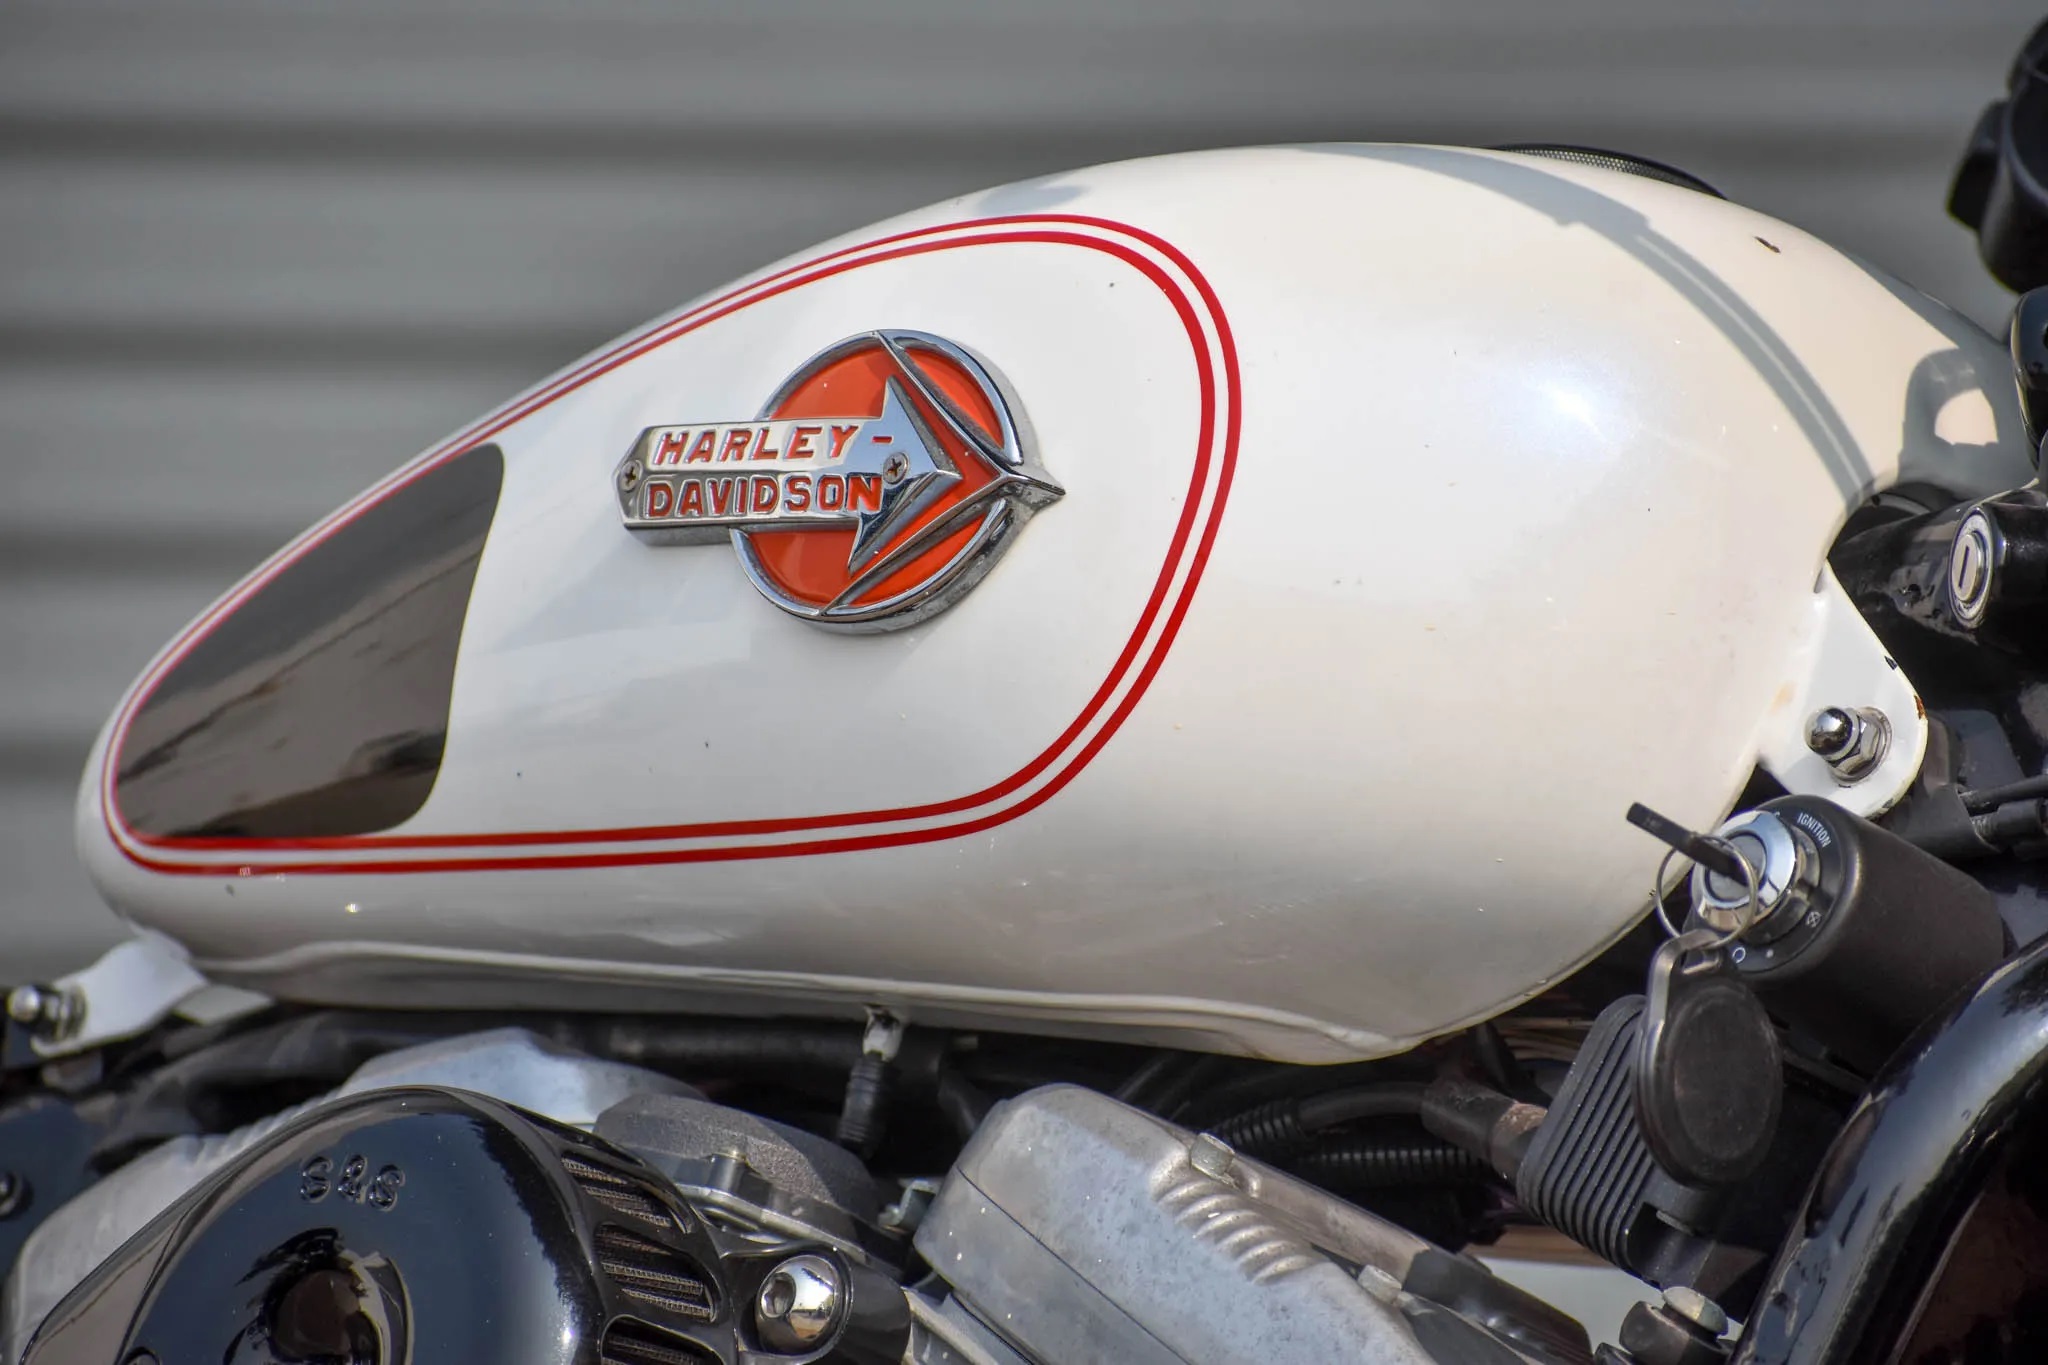 2006 Harley-Davidson Sportster Scrambler